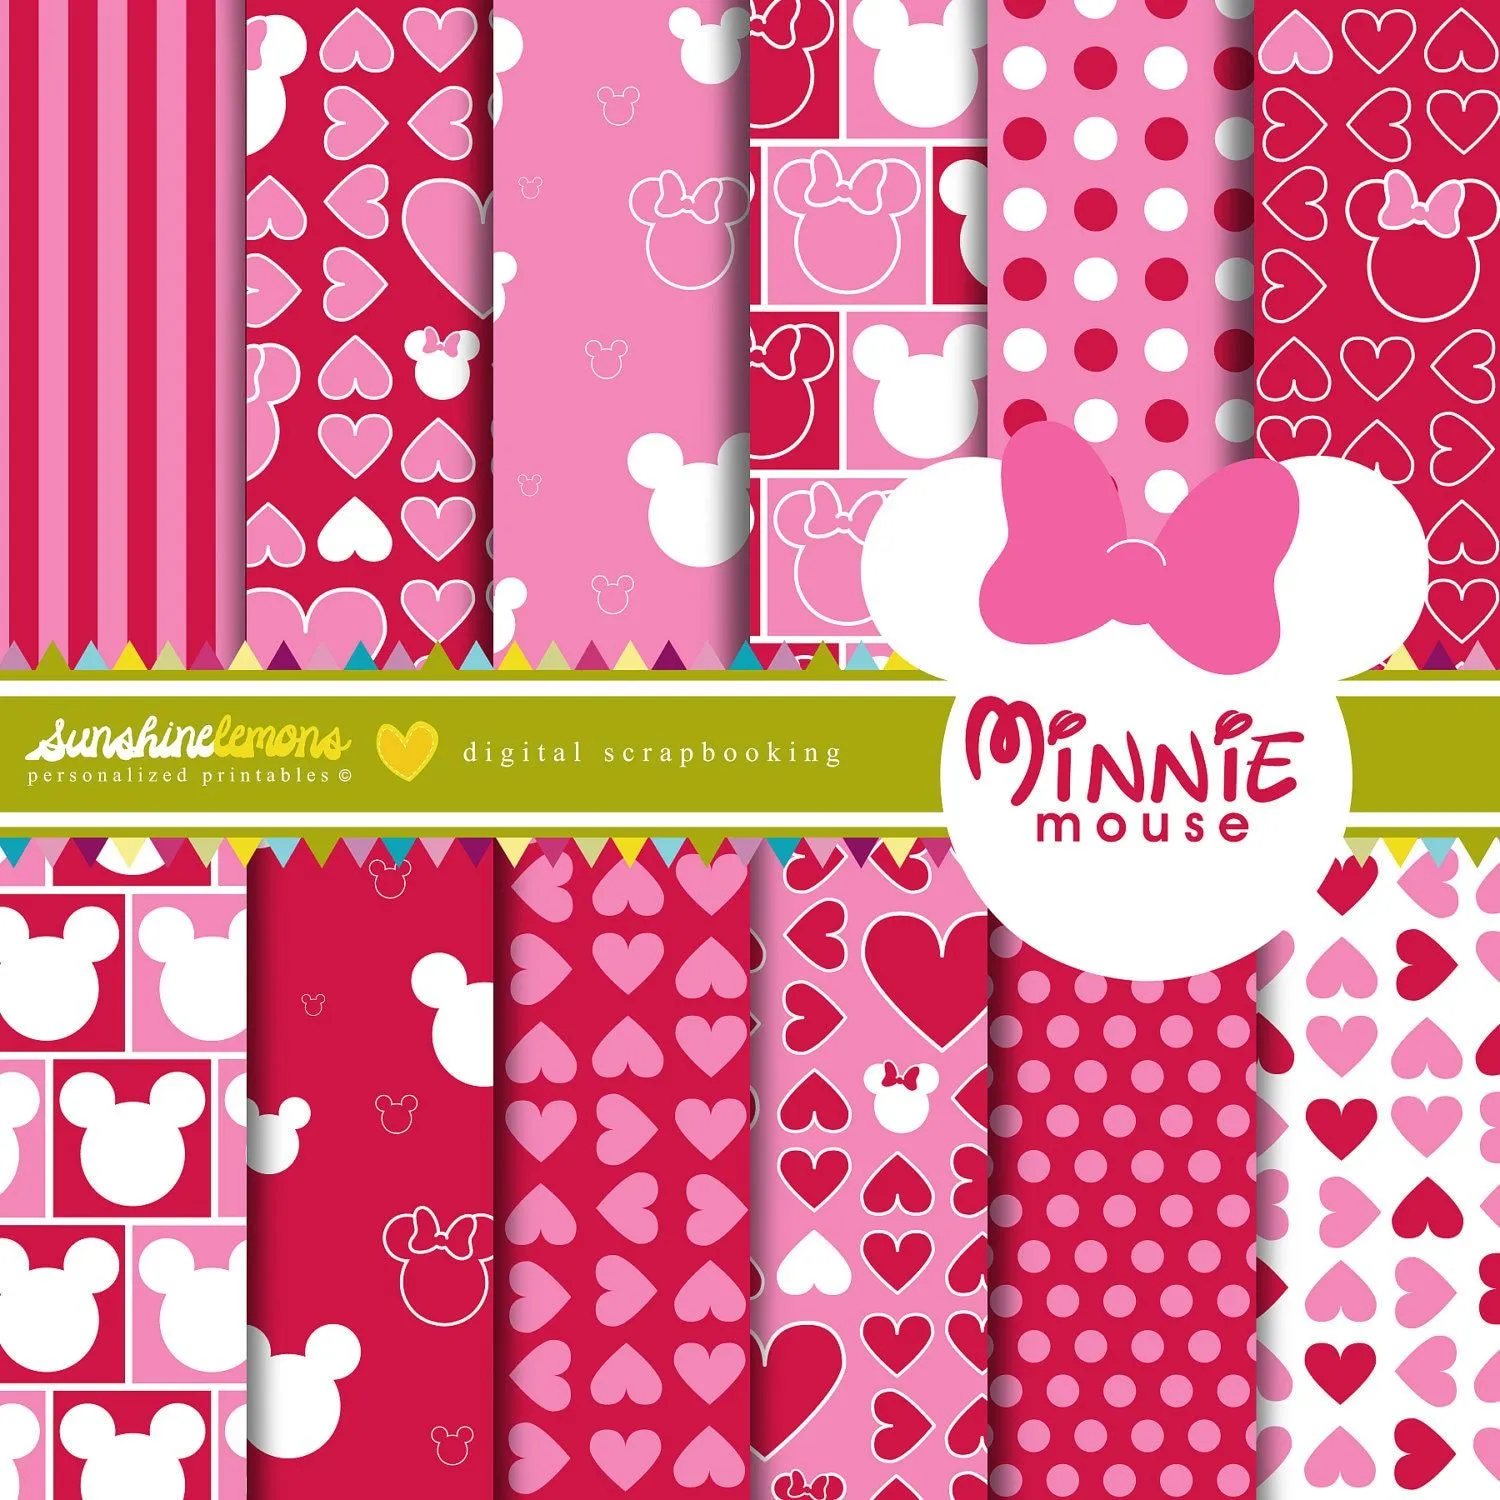 Minnie Mouse Digital Paper Pack Set of 12 by SunshineLemons